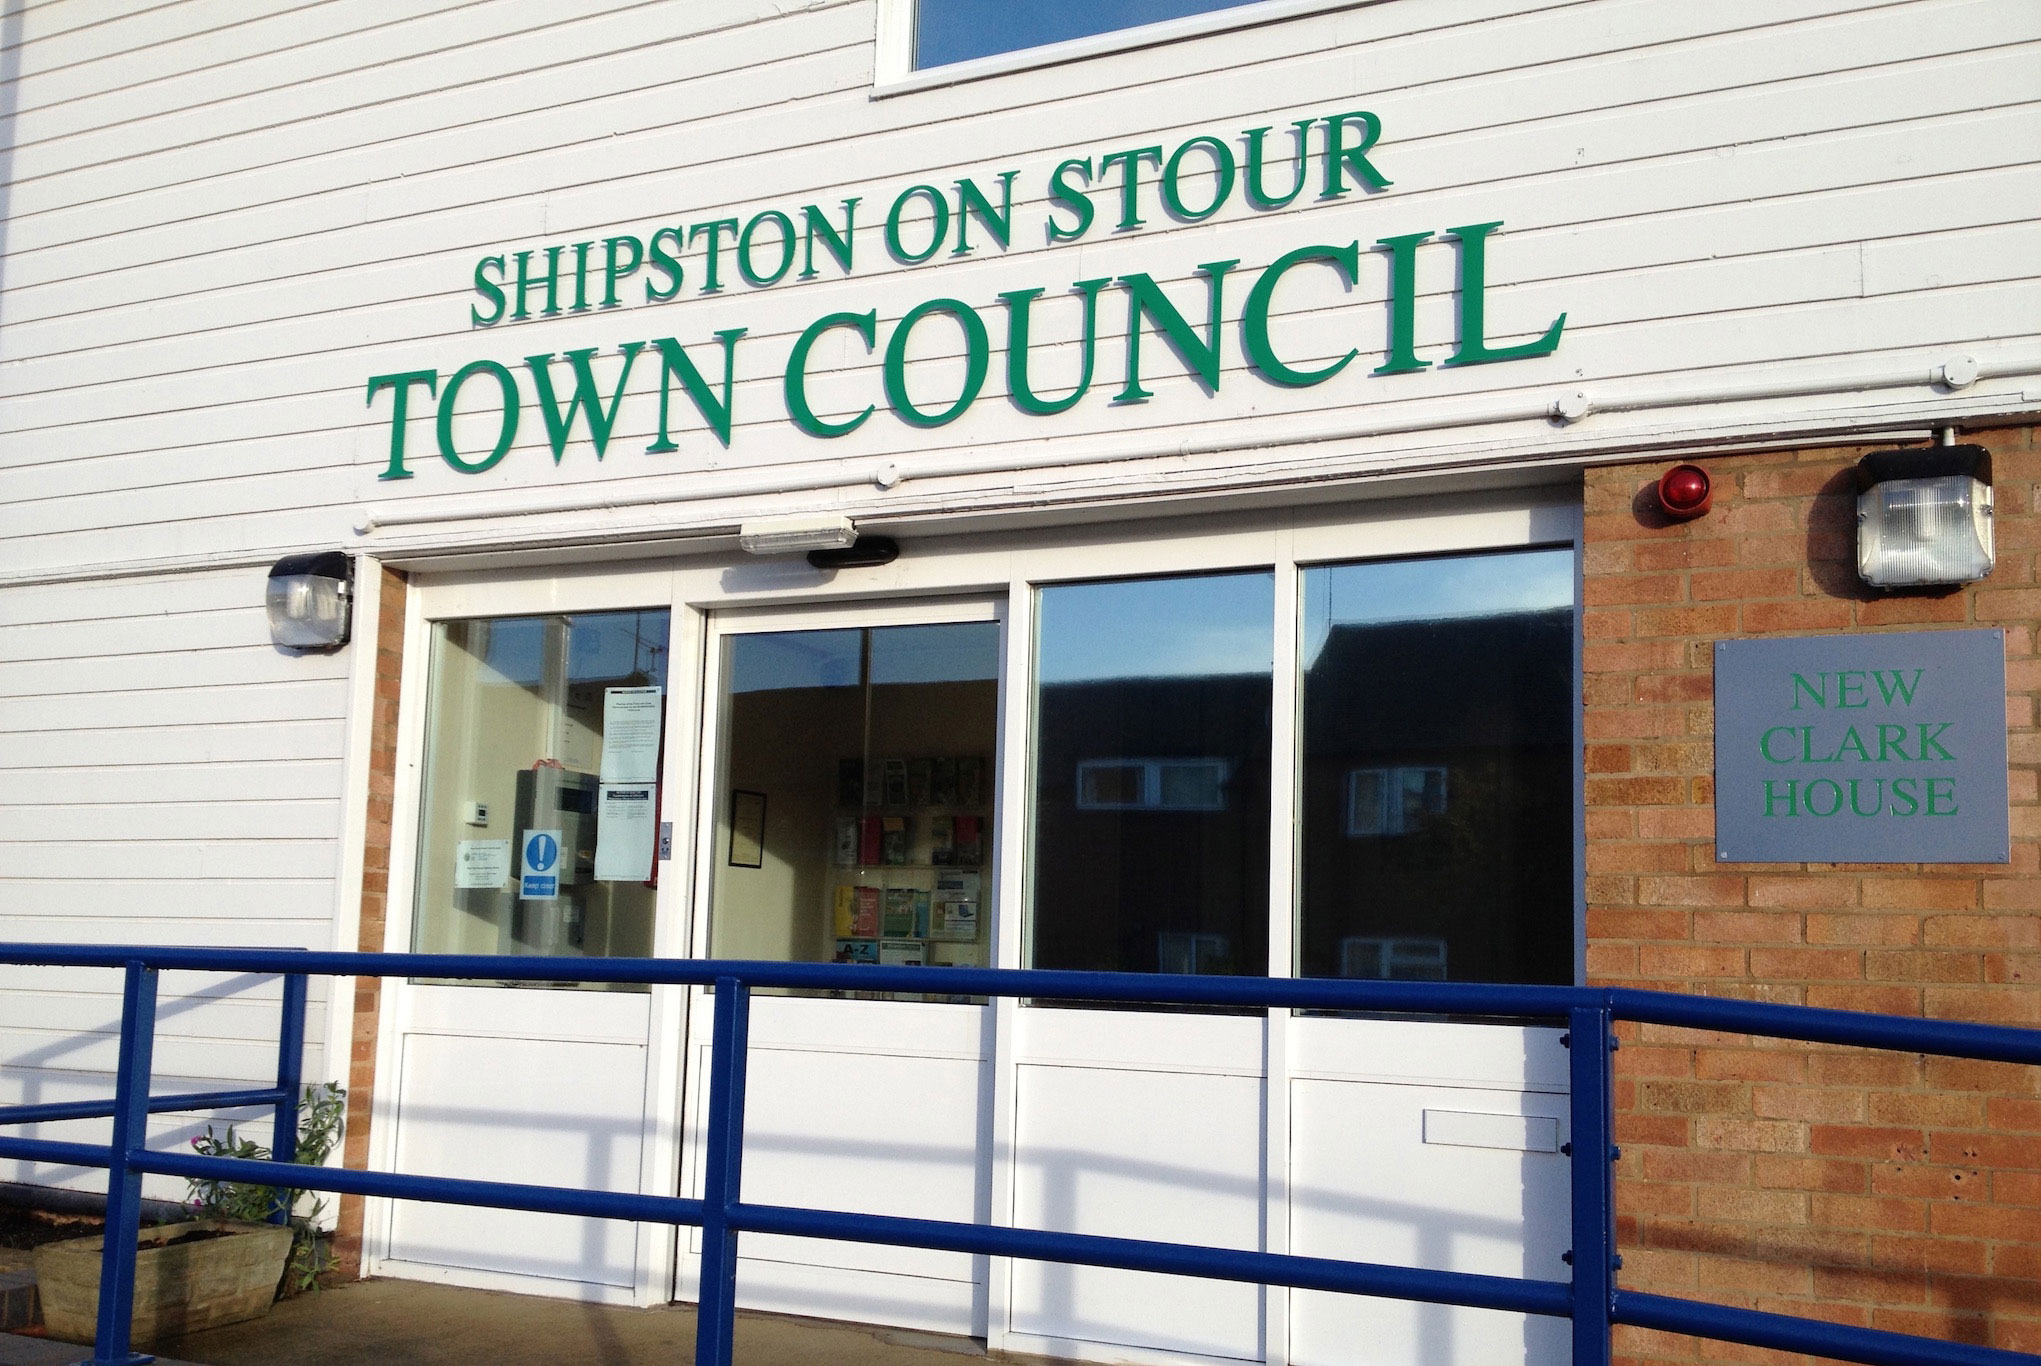 New Clerk House Shipston-on-Stour